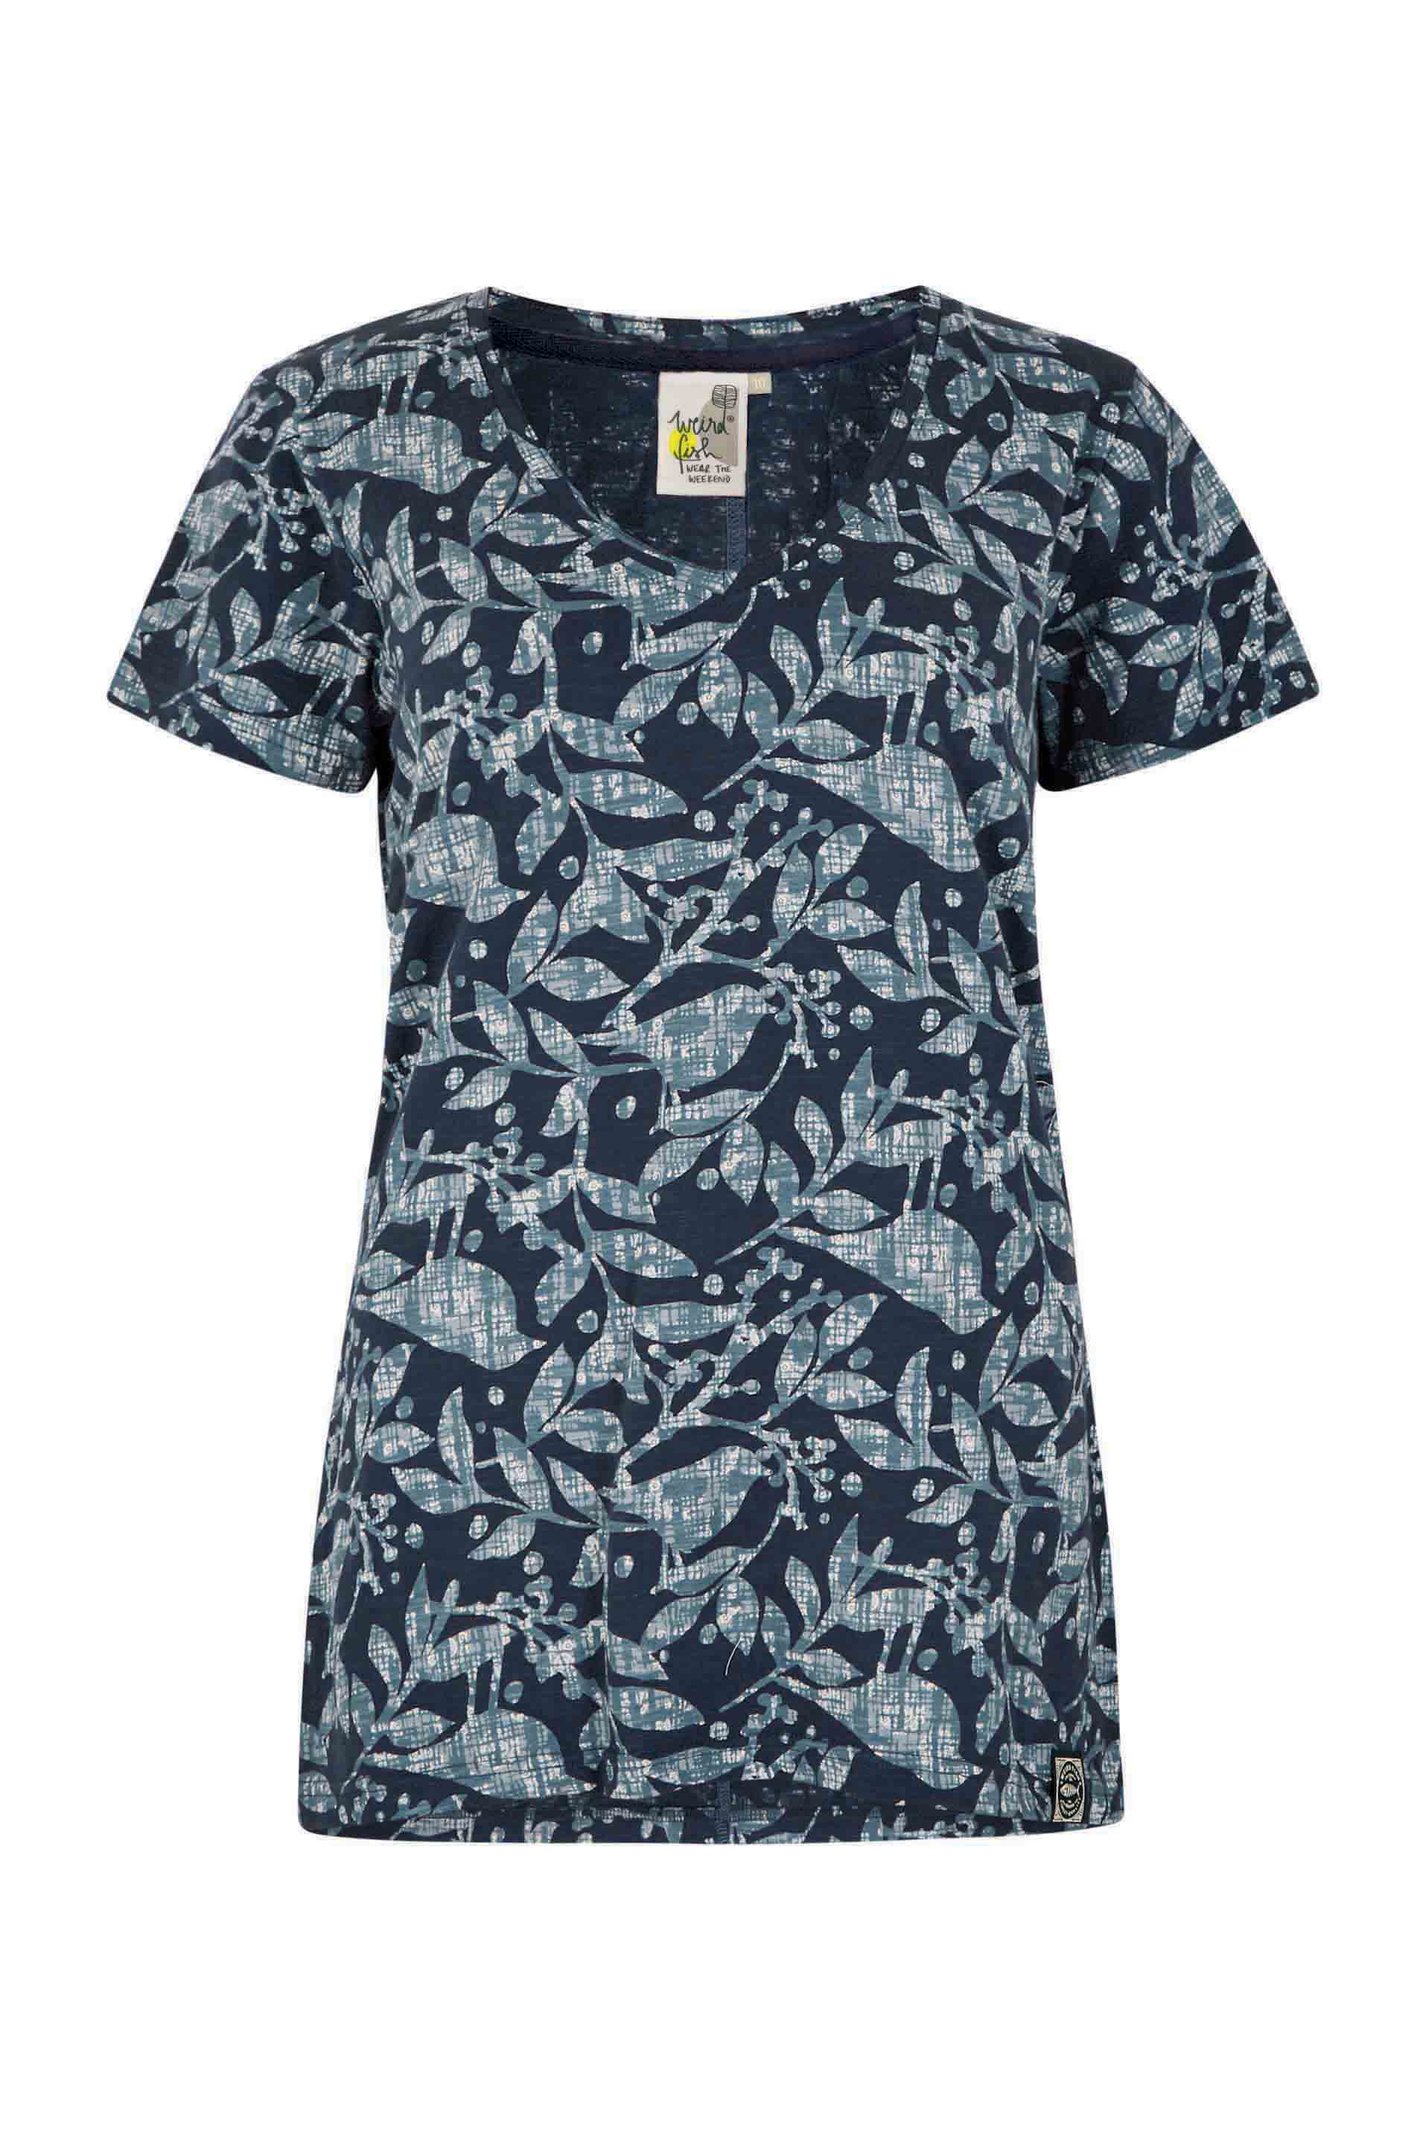 Weird Fish Merica Organic Cotton Printed Jersey T-Shirt Navy Size 8